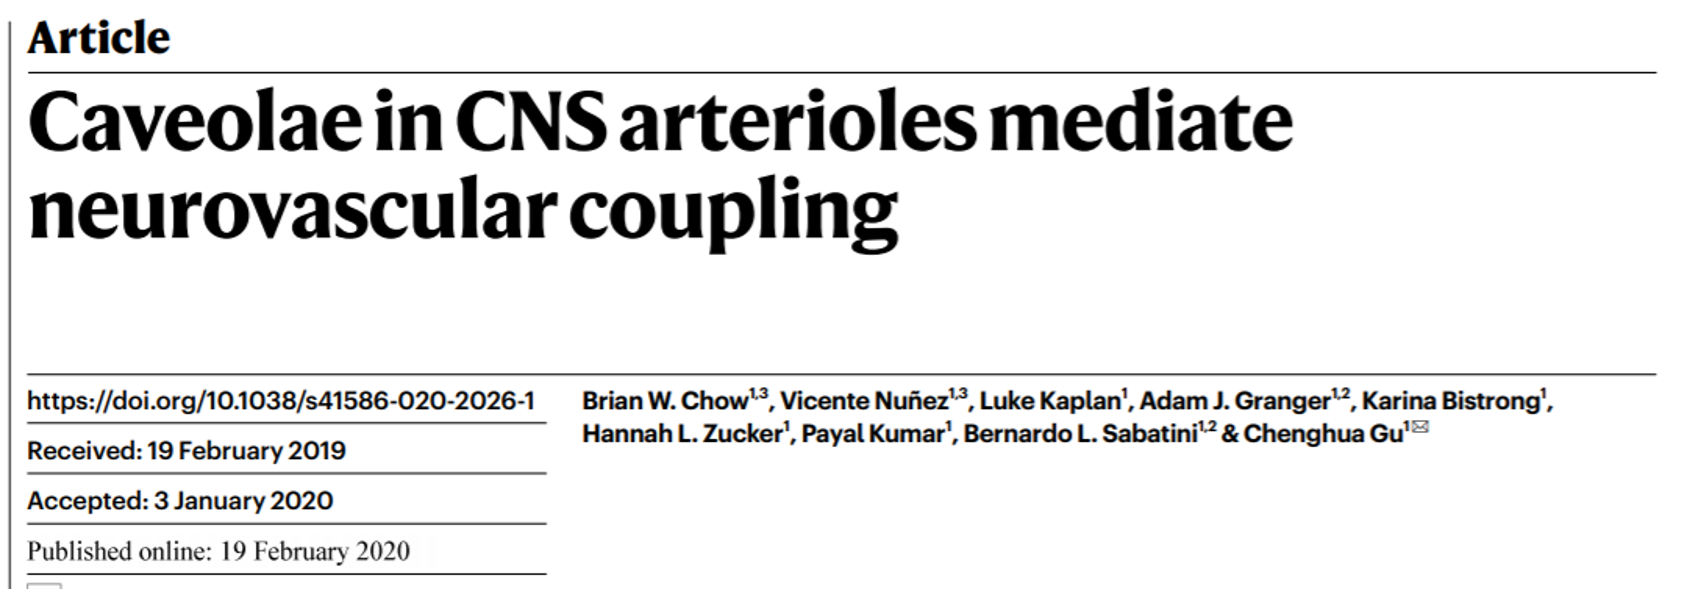 Caveolae in CNS arterioles mediate neurovascular coupling